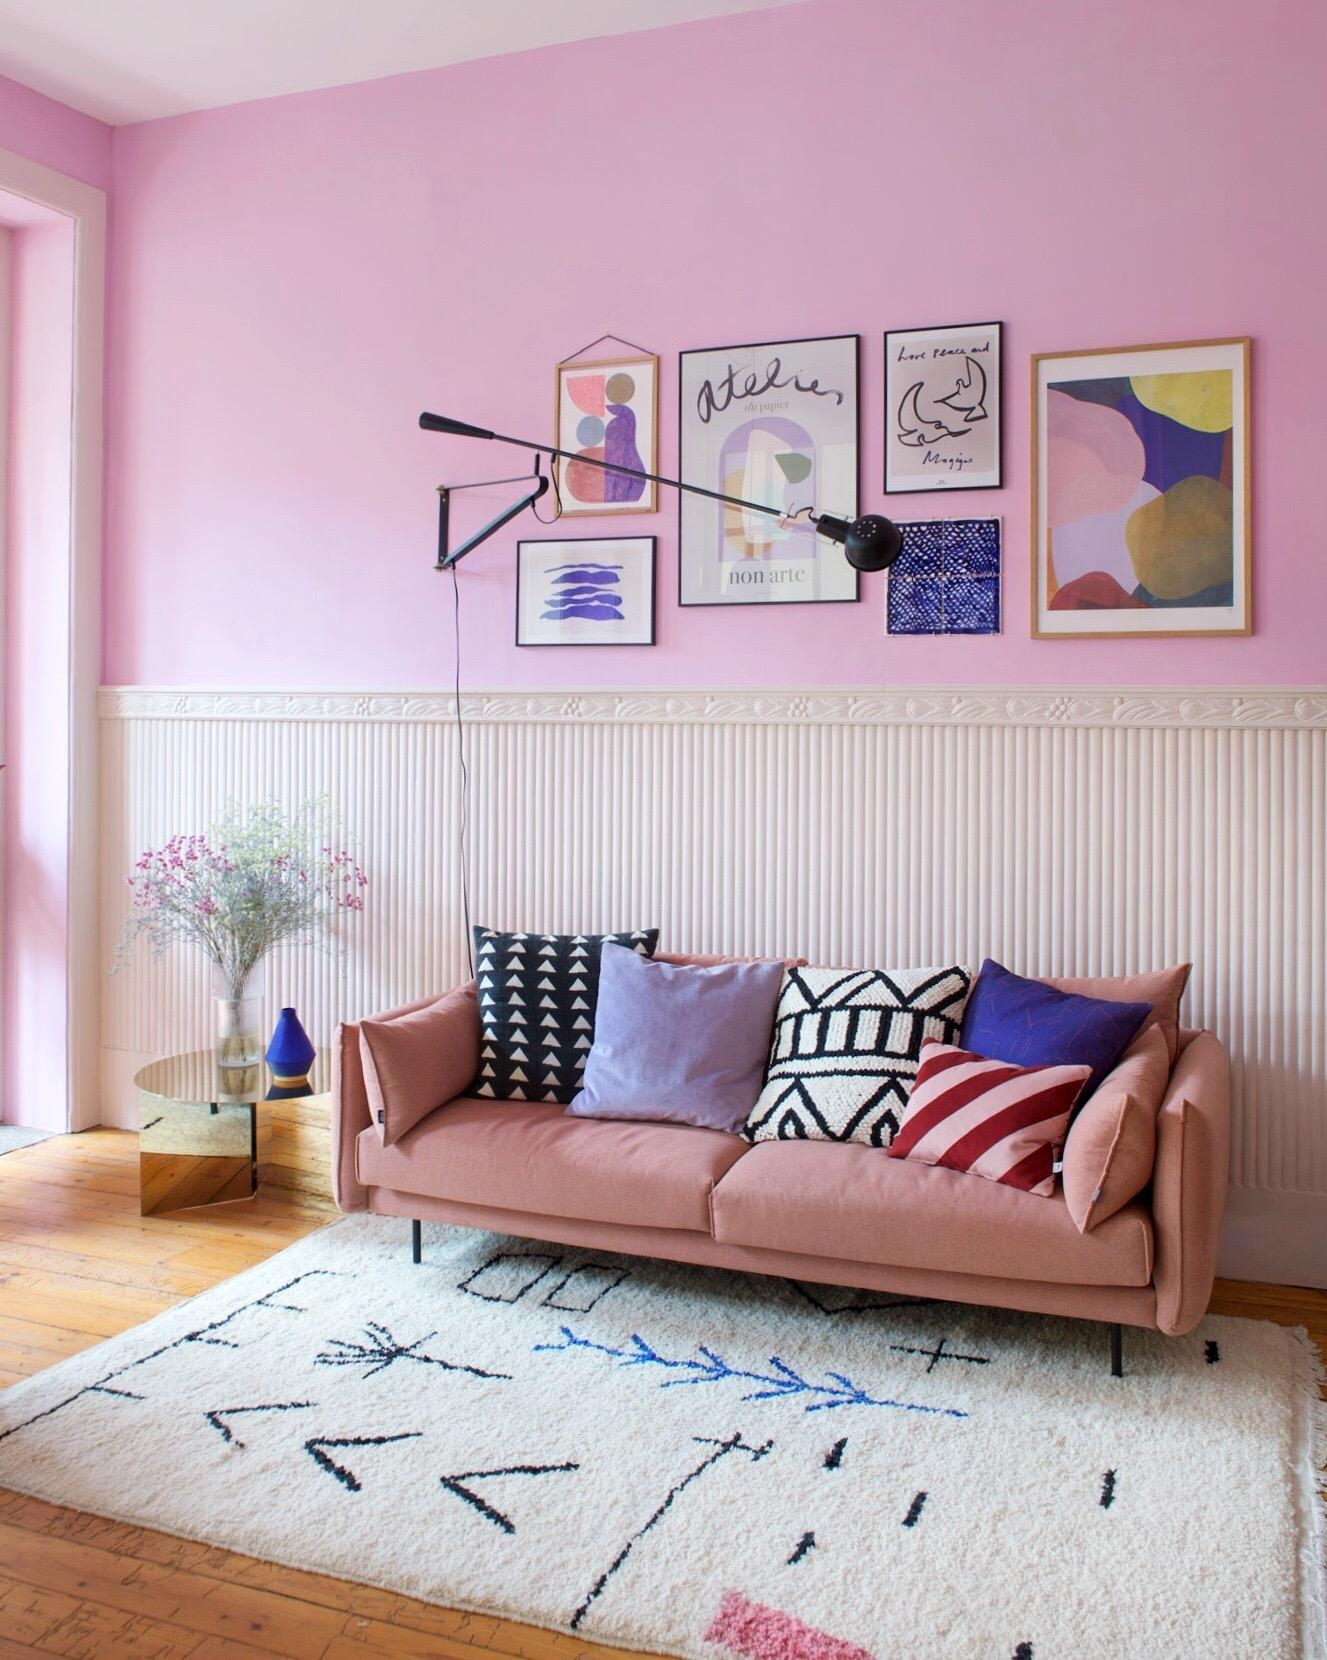 Sofaliebe 💜
#pink #colorcombo #livingroom